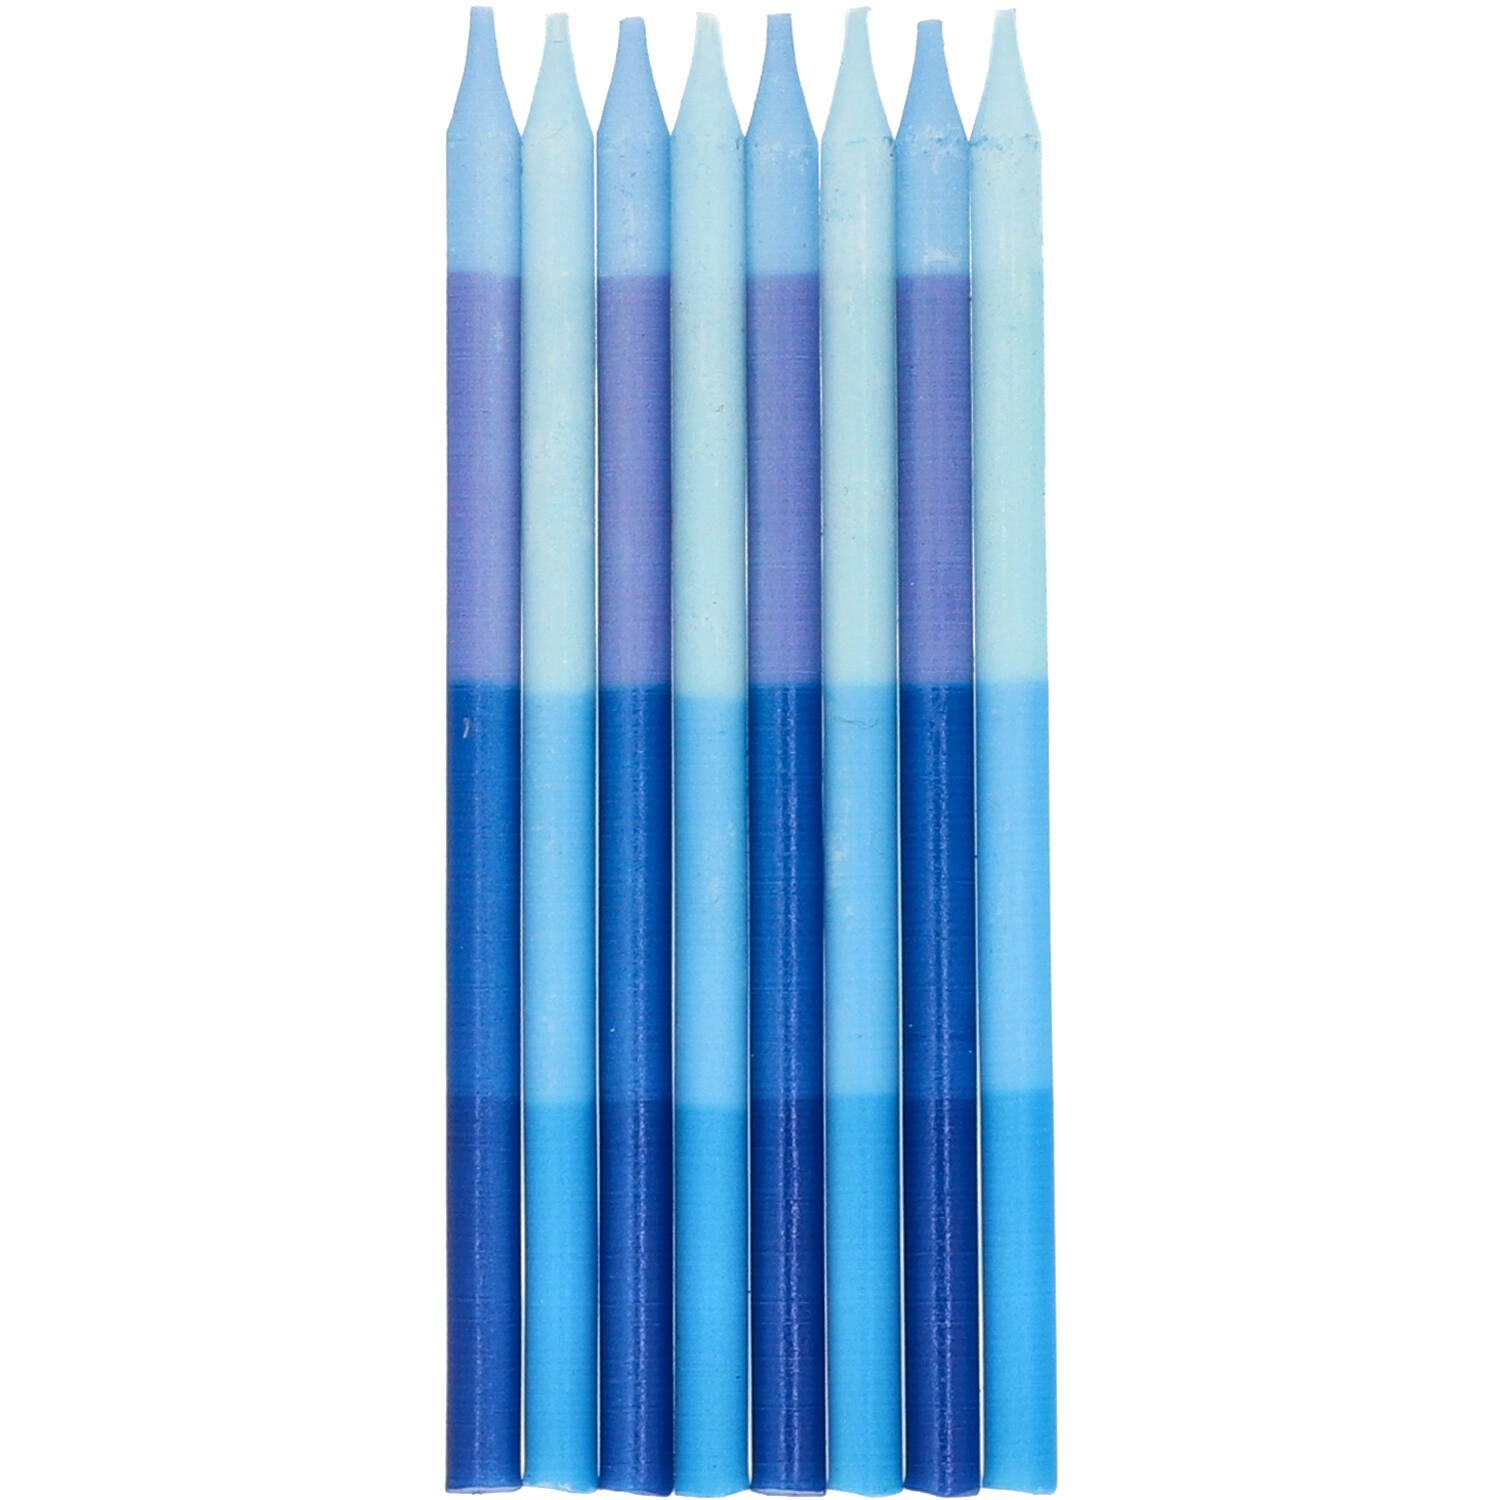 NEU Geburtstags-Kerzen, ca. 10cm, 24 Stck inkl. Halter, blau